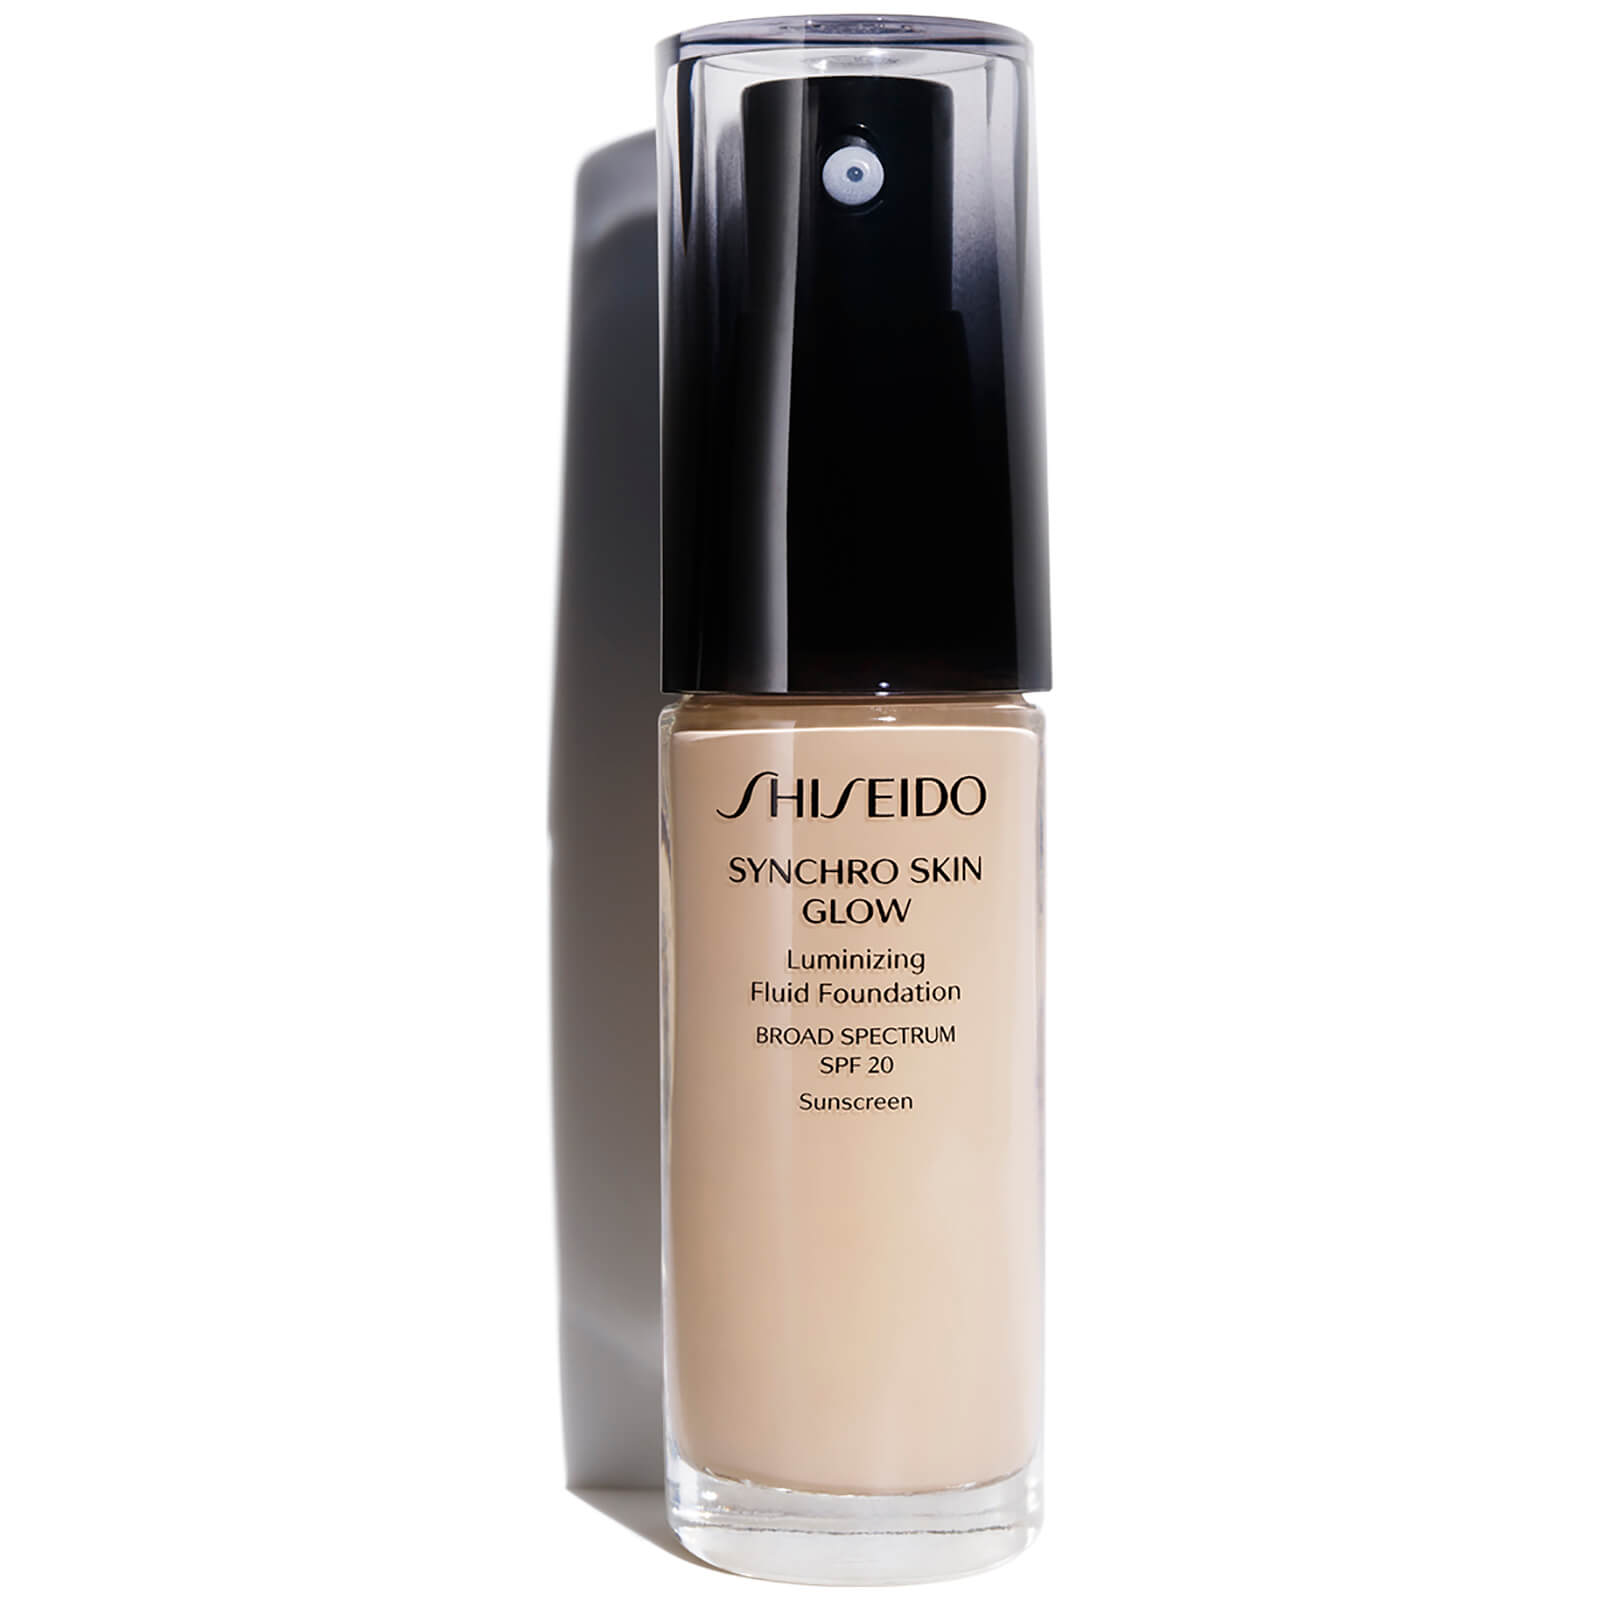 Shiseido Synchro Skin Glow Luminizing Foundation 30ml (Various Shades) - Neutral 1